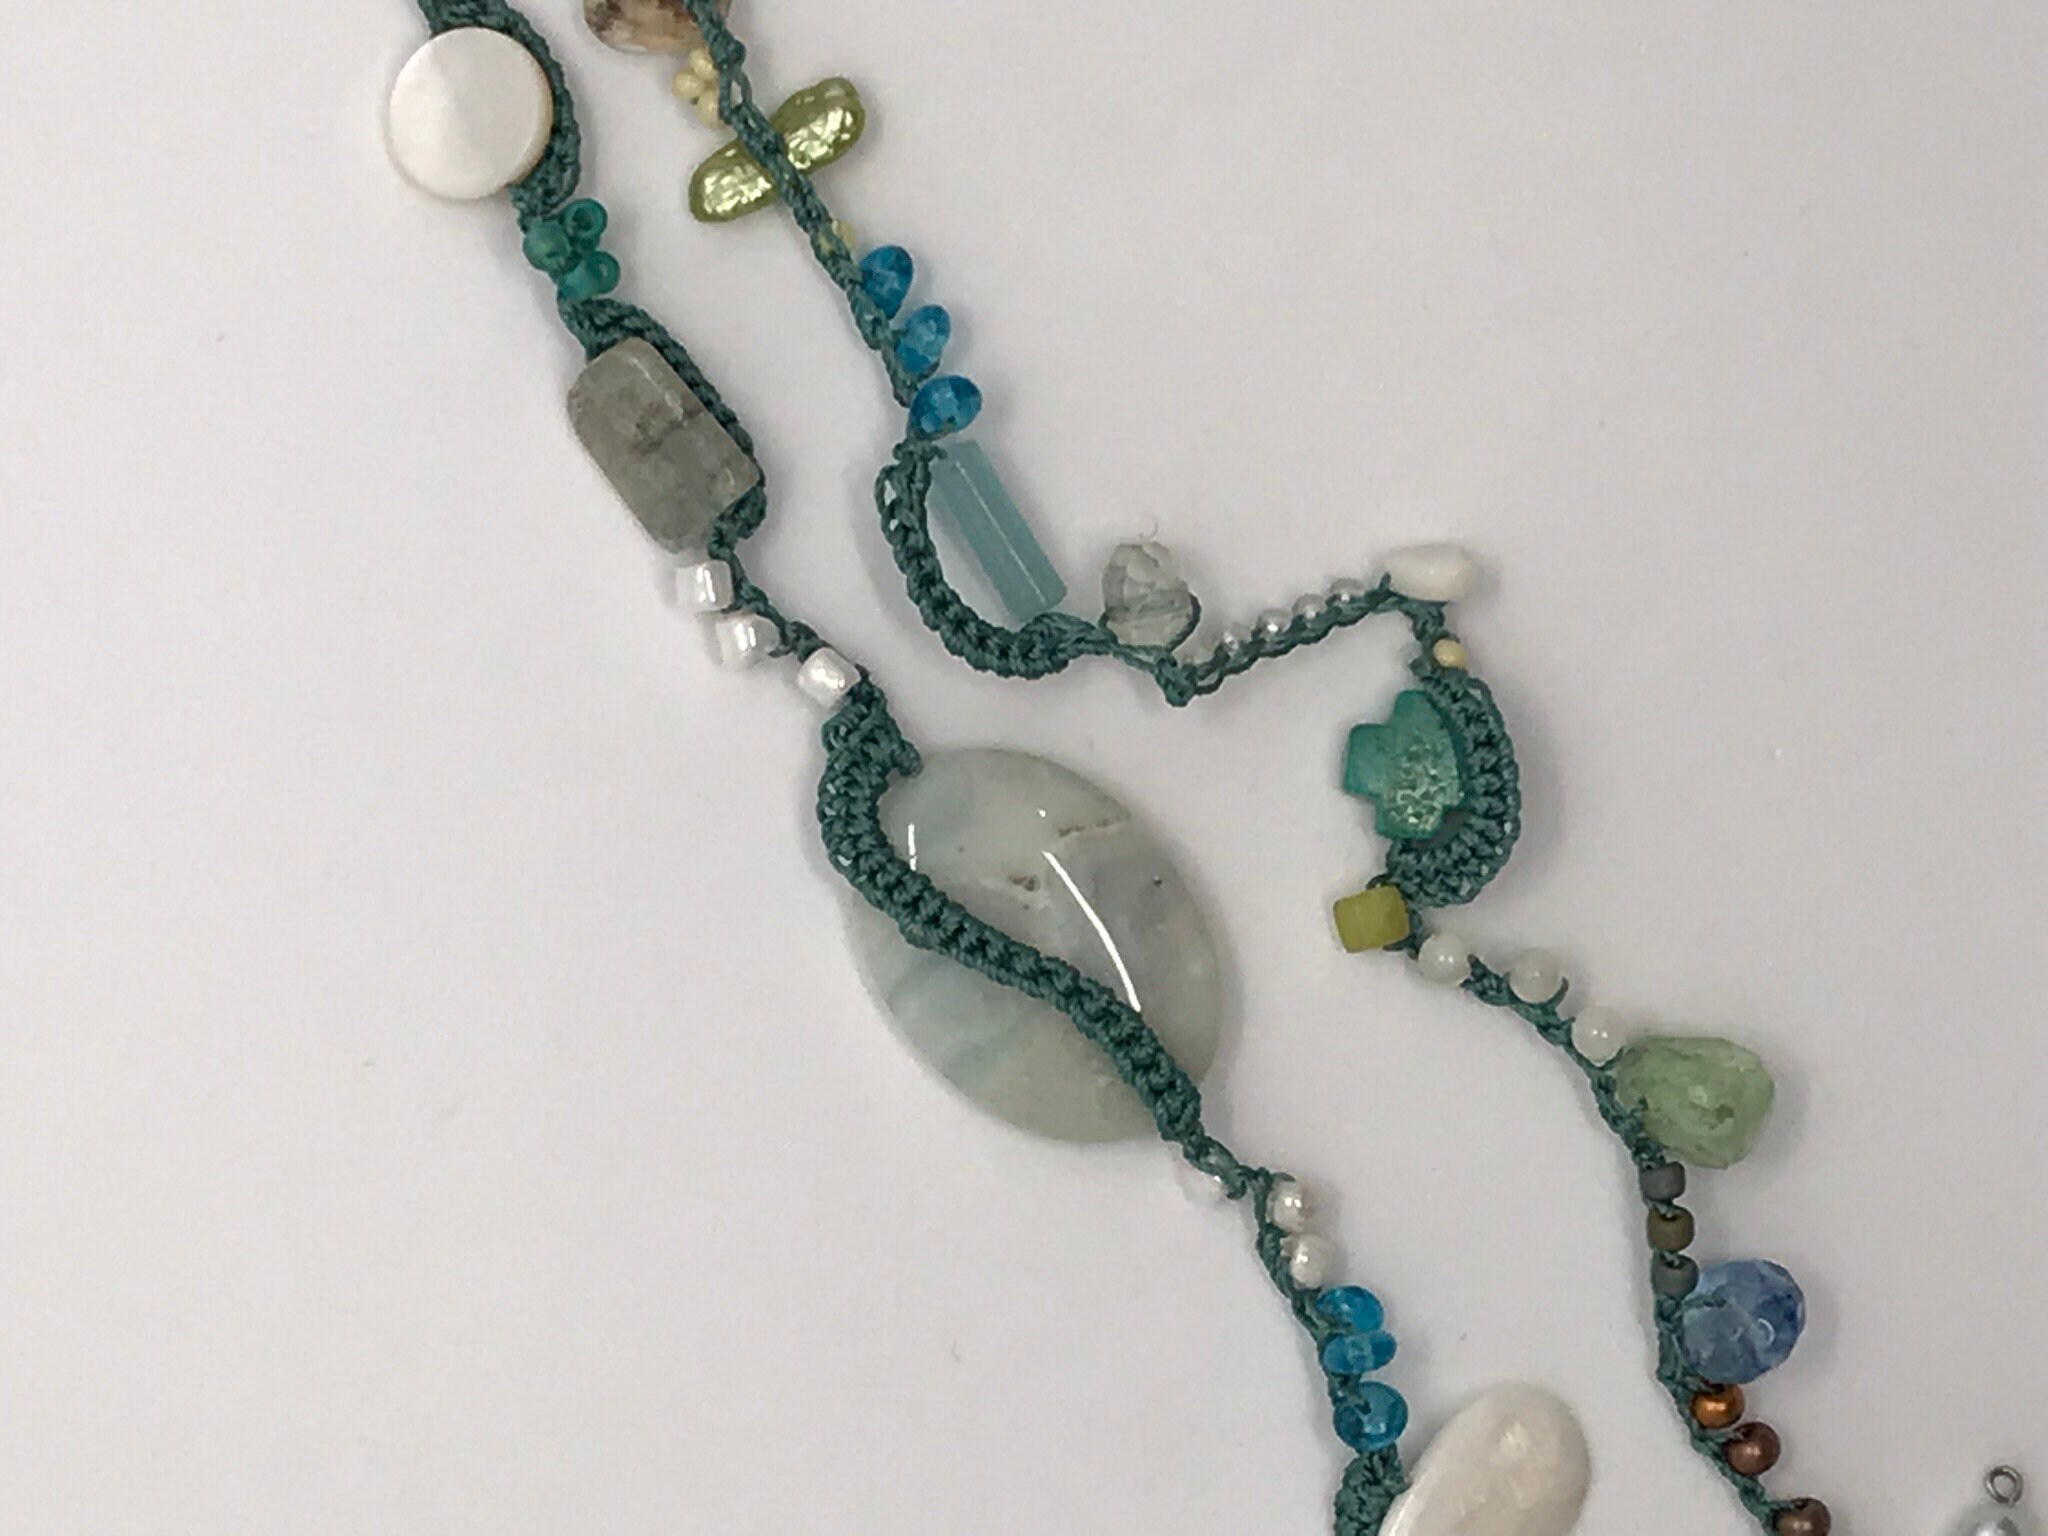 Boho Crocheted Necklace or Wrap Bracelet - Etsy